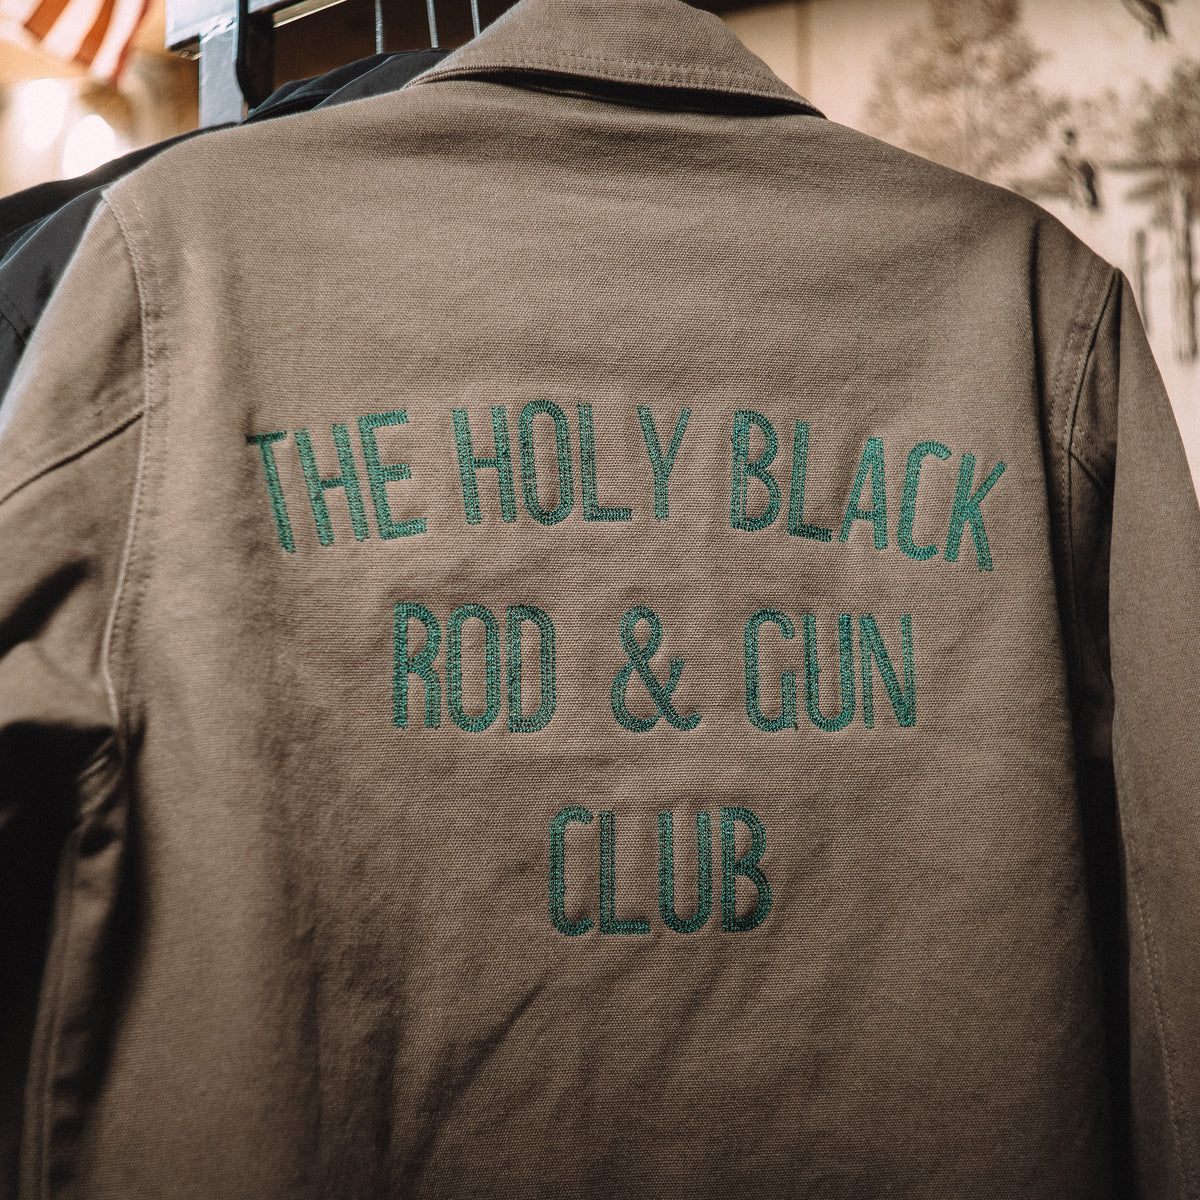 Rod and Gun Club Jacket- PRE-ORDER